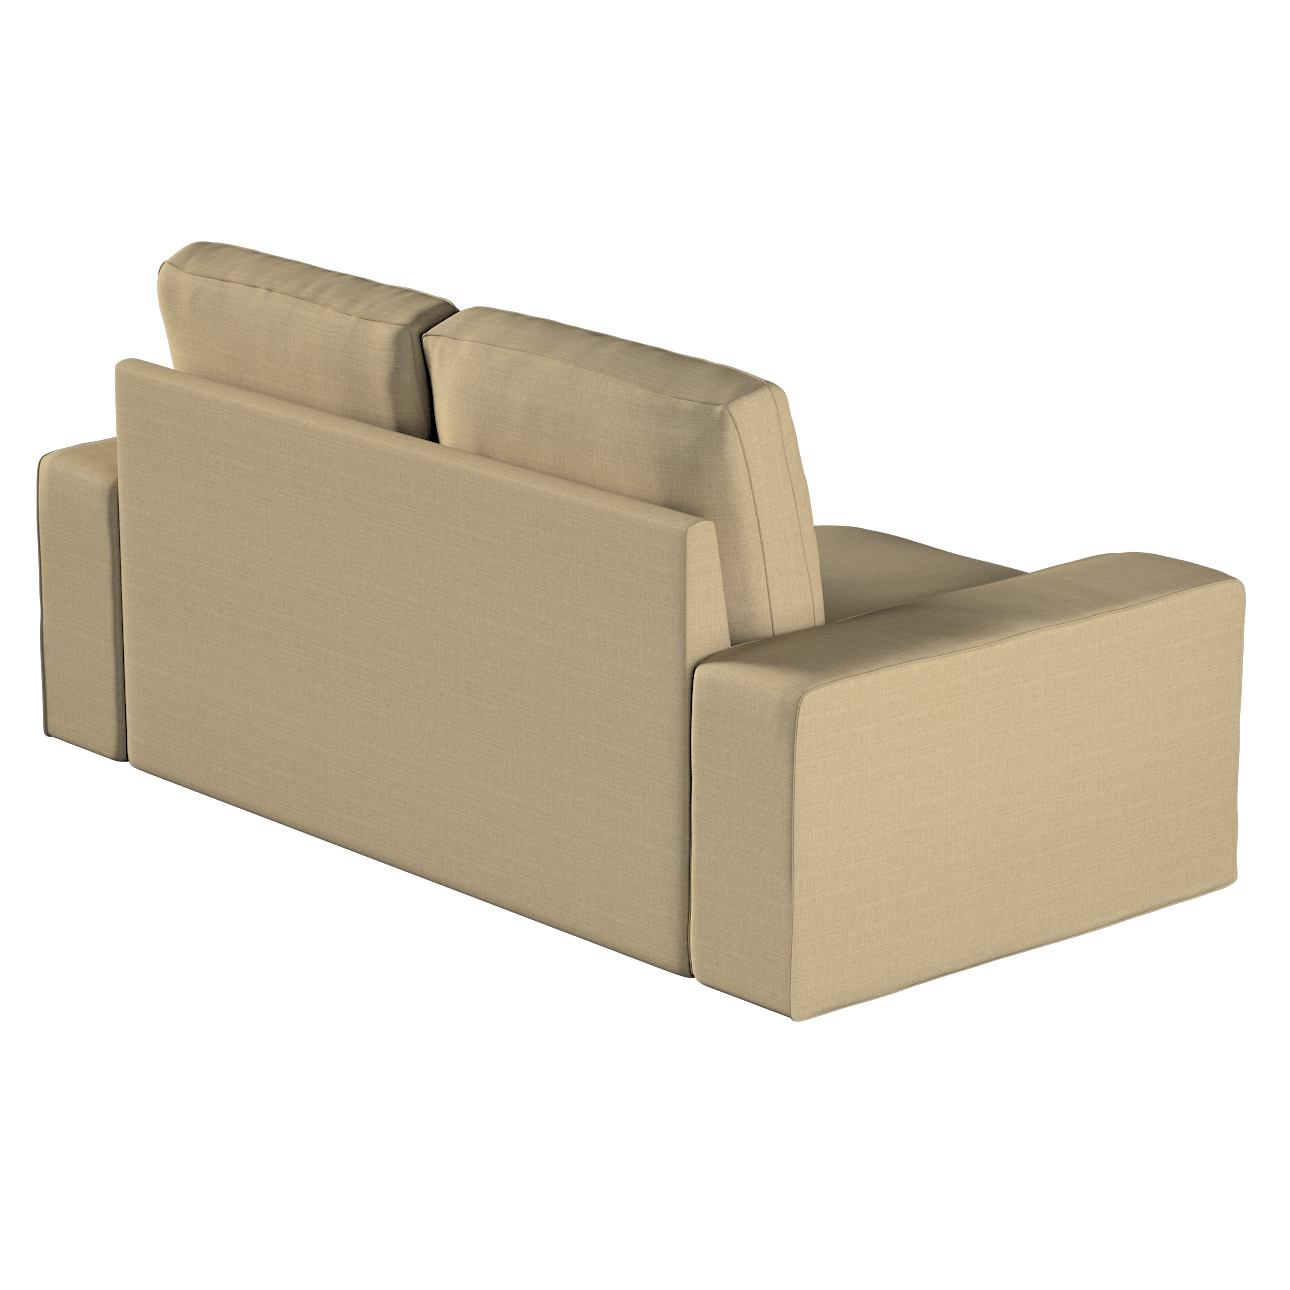 Bezug für Kivik 2-Sitzer Sofa, dunkelbeige, Bezug für Sofa Kivik 2-Sitzer, günstig online kaufen